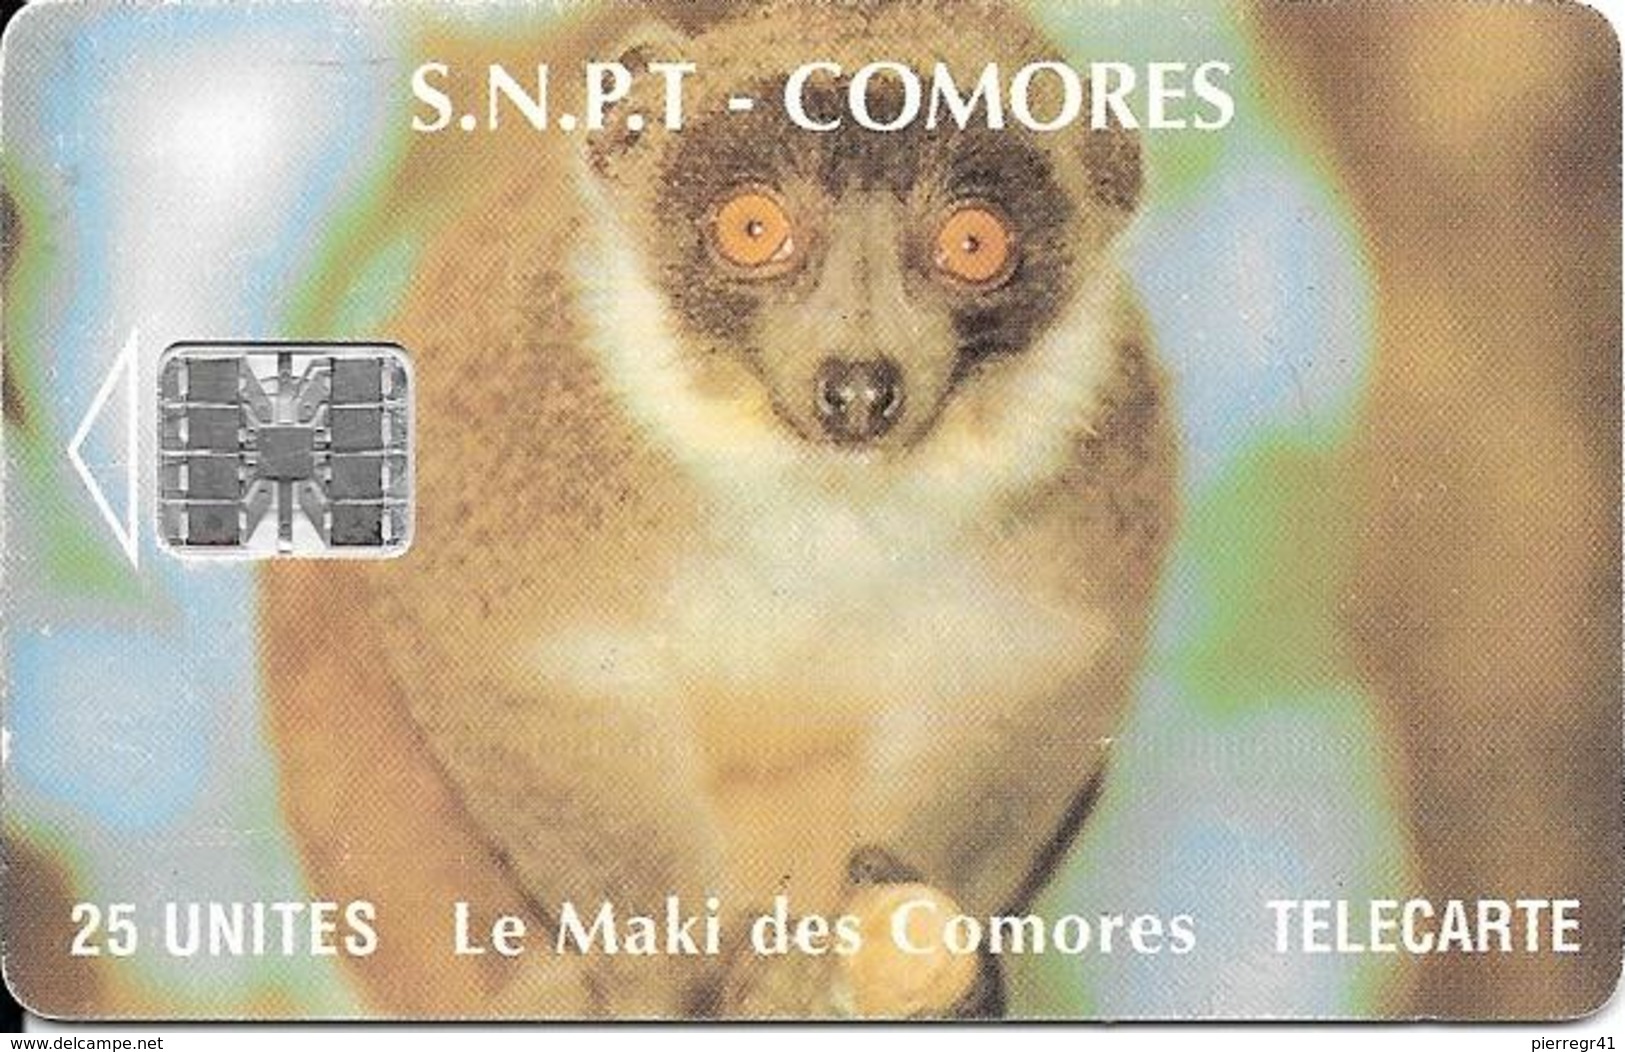 CARTE-PUCE-25U-SC7-SNPT COMORES-MAKI-UTILISE-V°9 N°Rge N° C5A153873-TBE - Comores